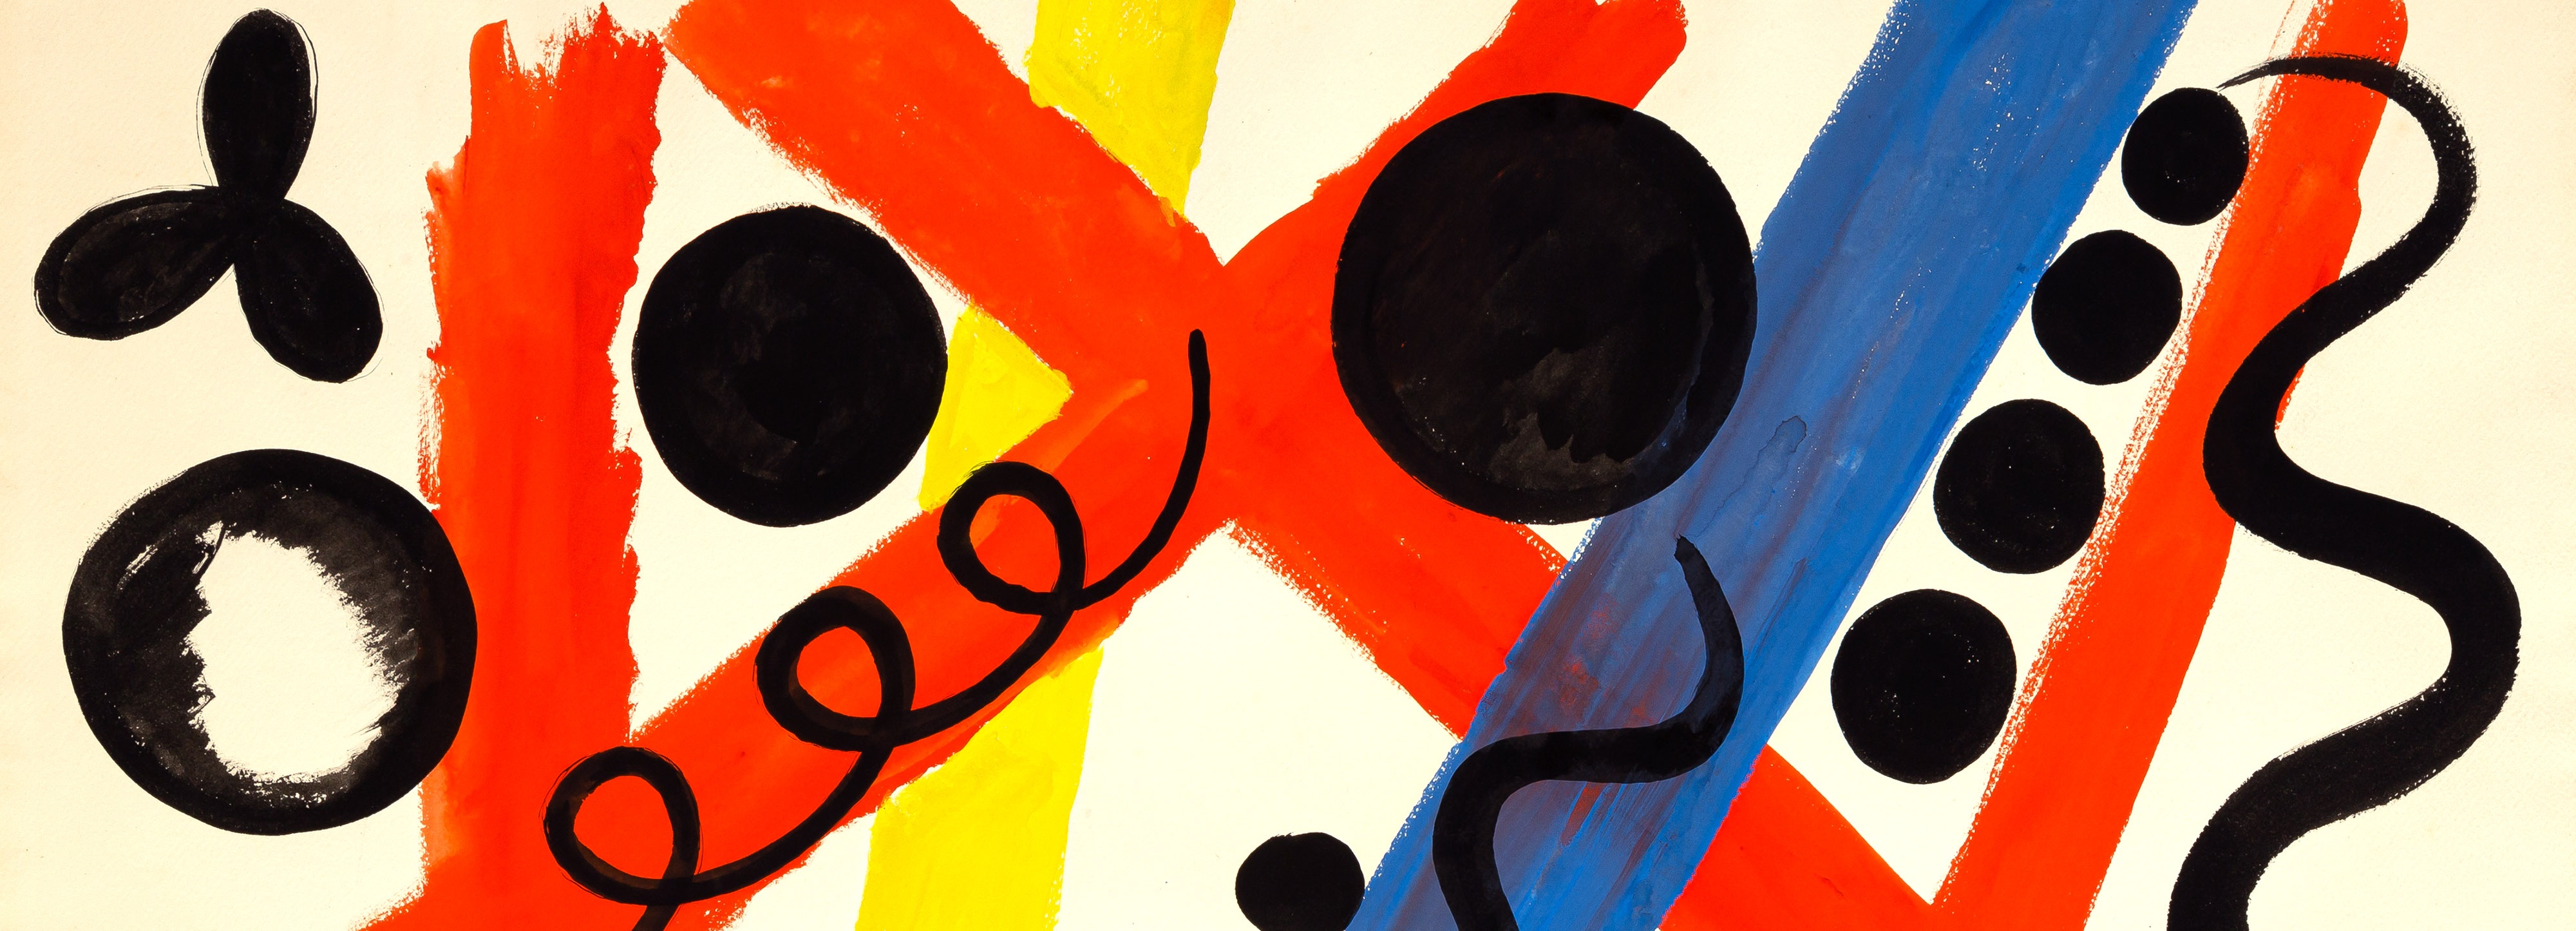 Alexander Calder "The Beams" 1963